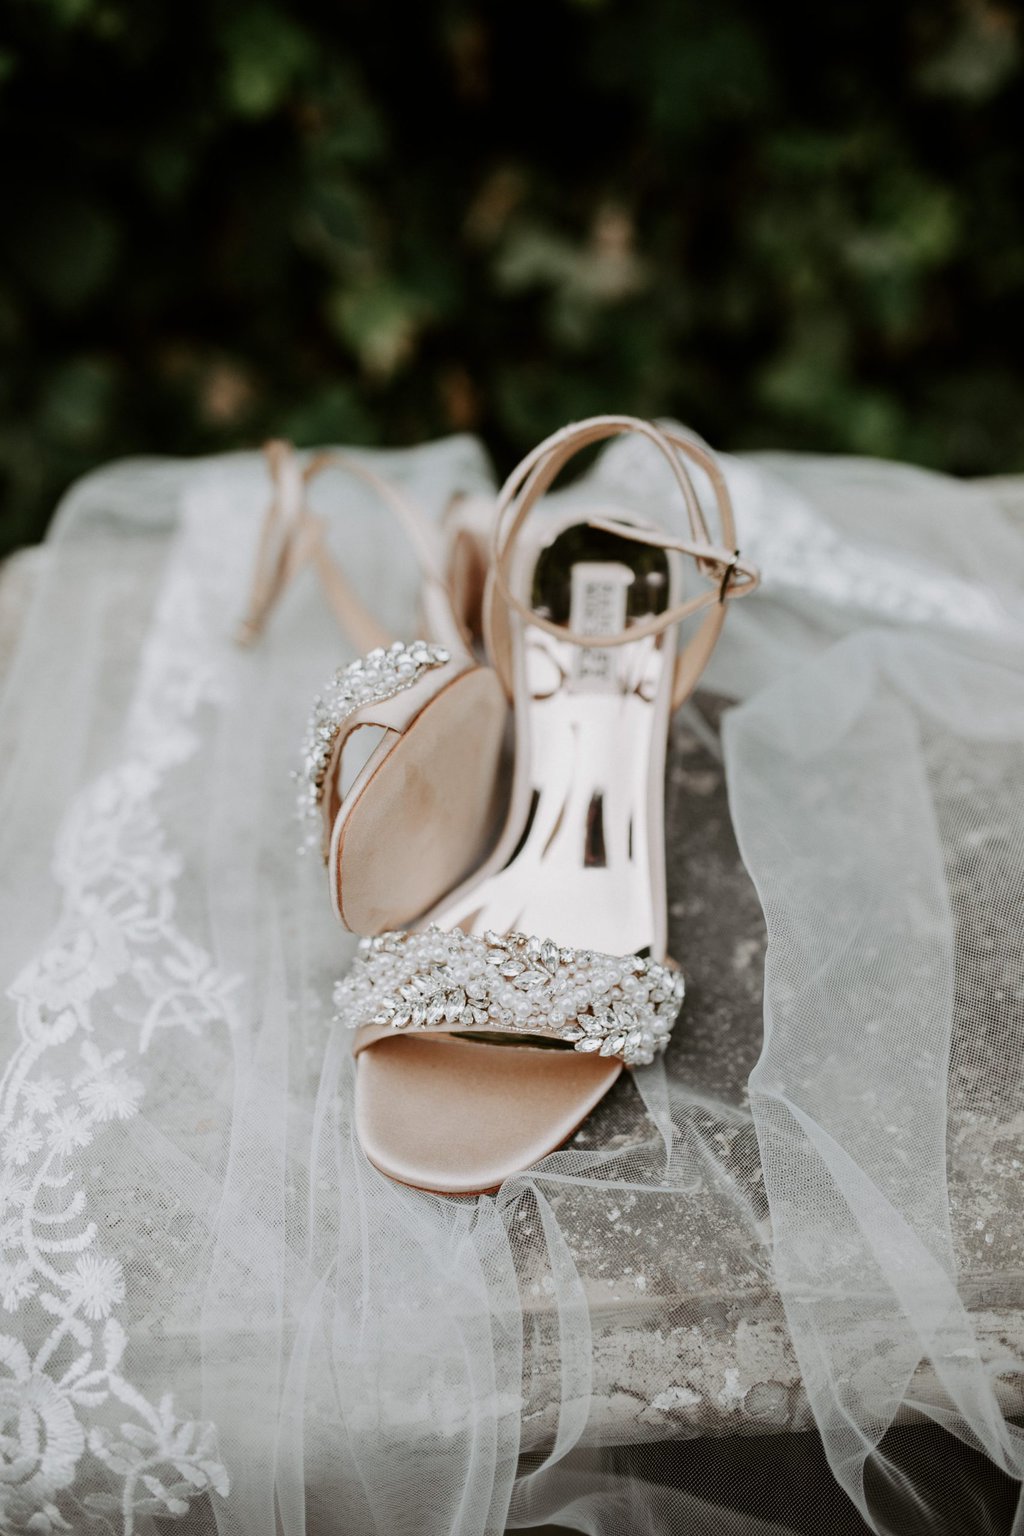 Designer Women Shoes Comfortable Wedding Bridal Shoes Sheepskin